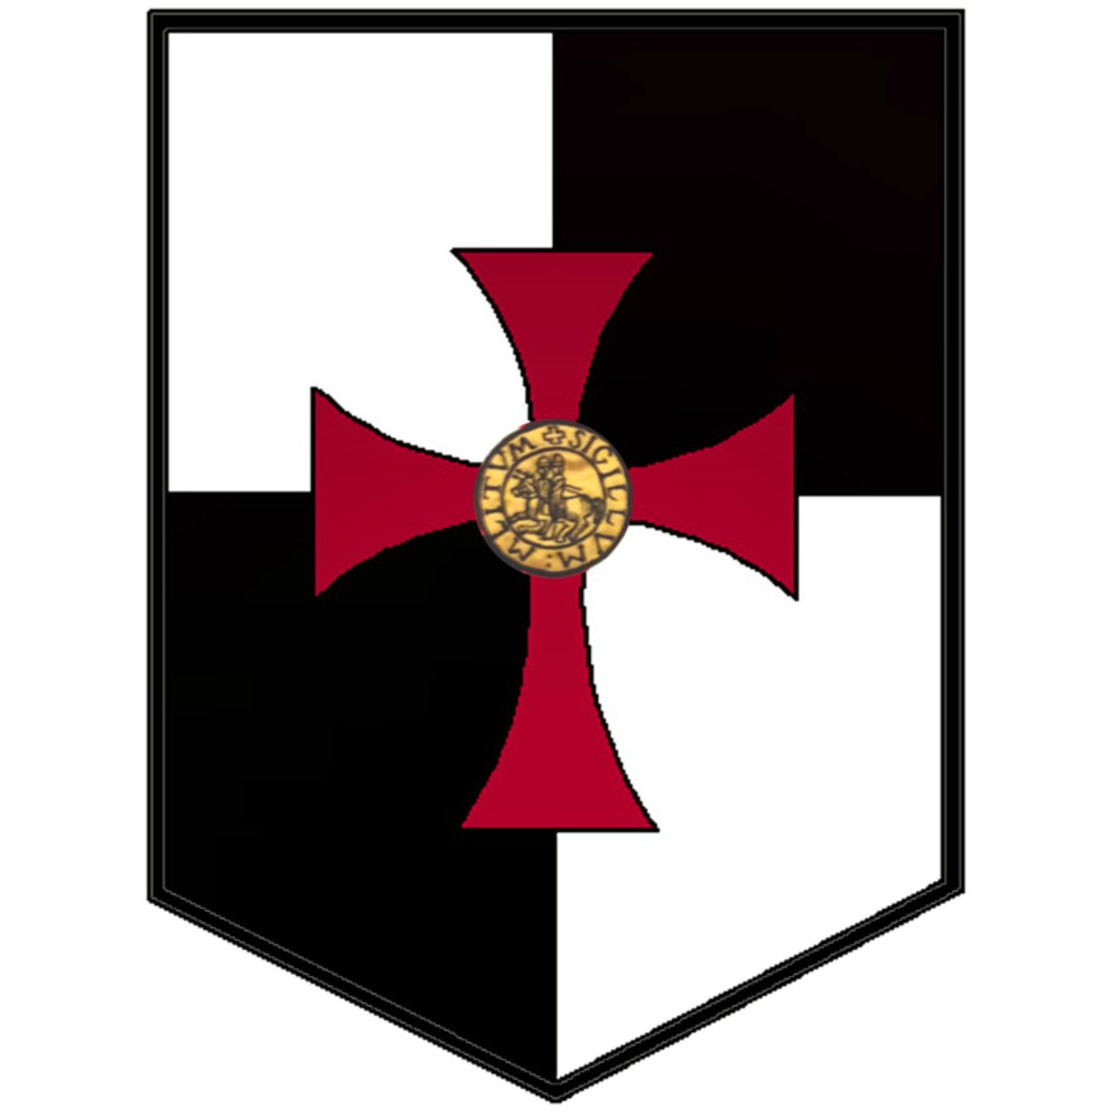 Templarios